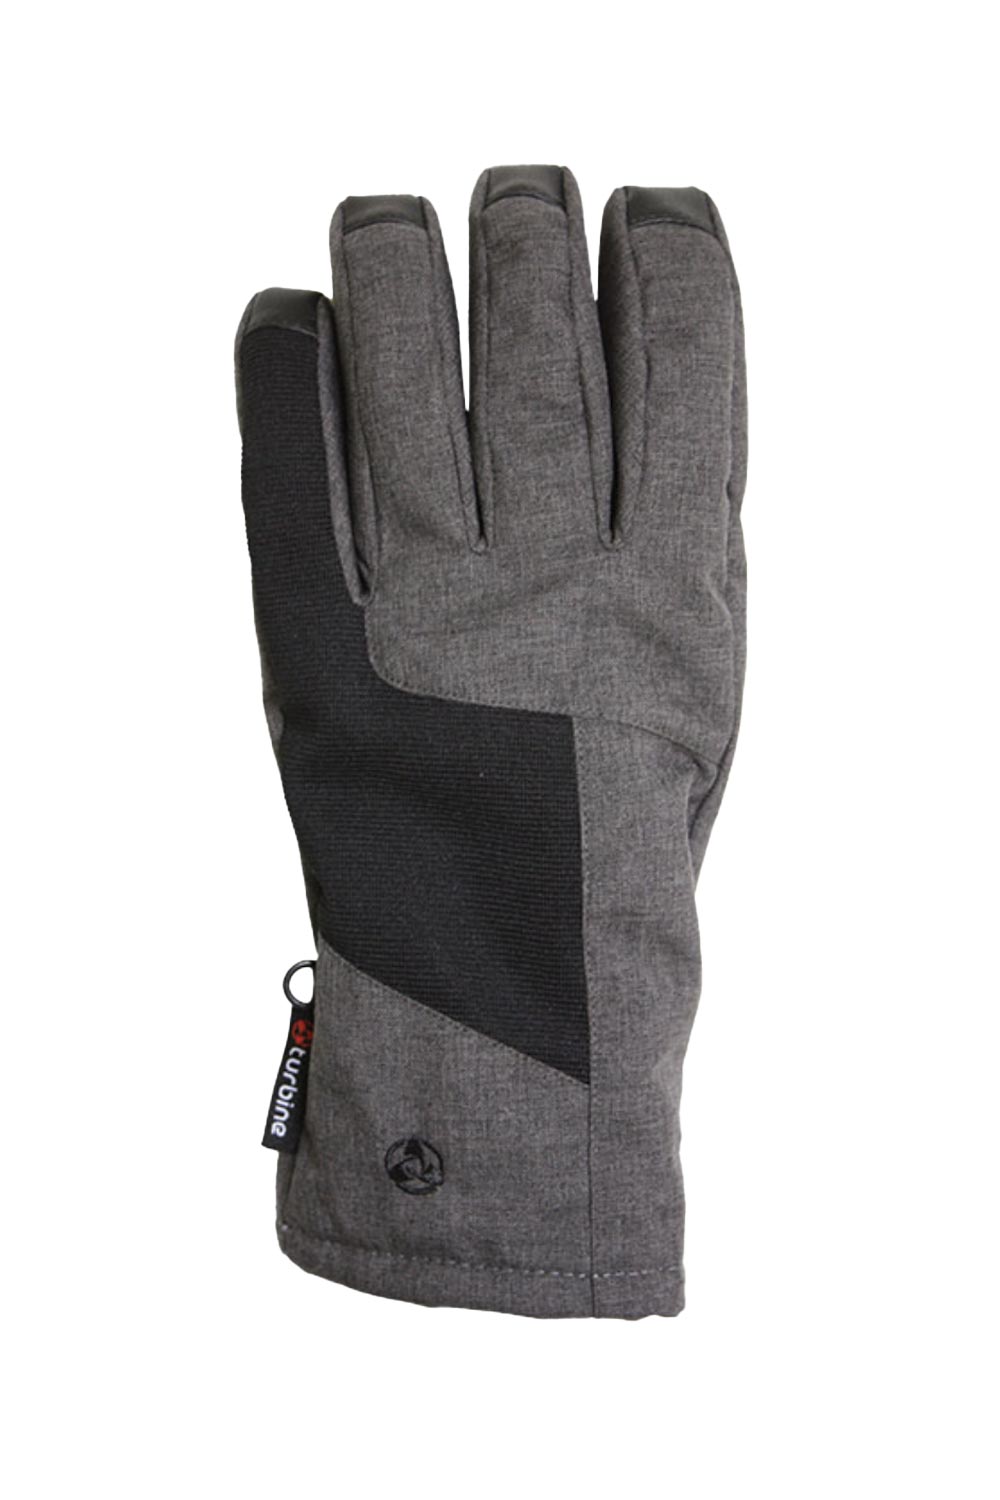 Men's Turbine Teton ski gloves, black and gray